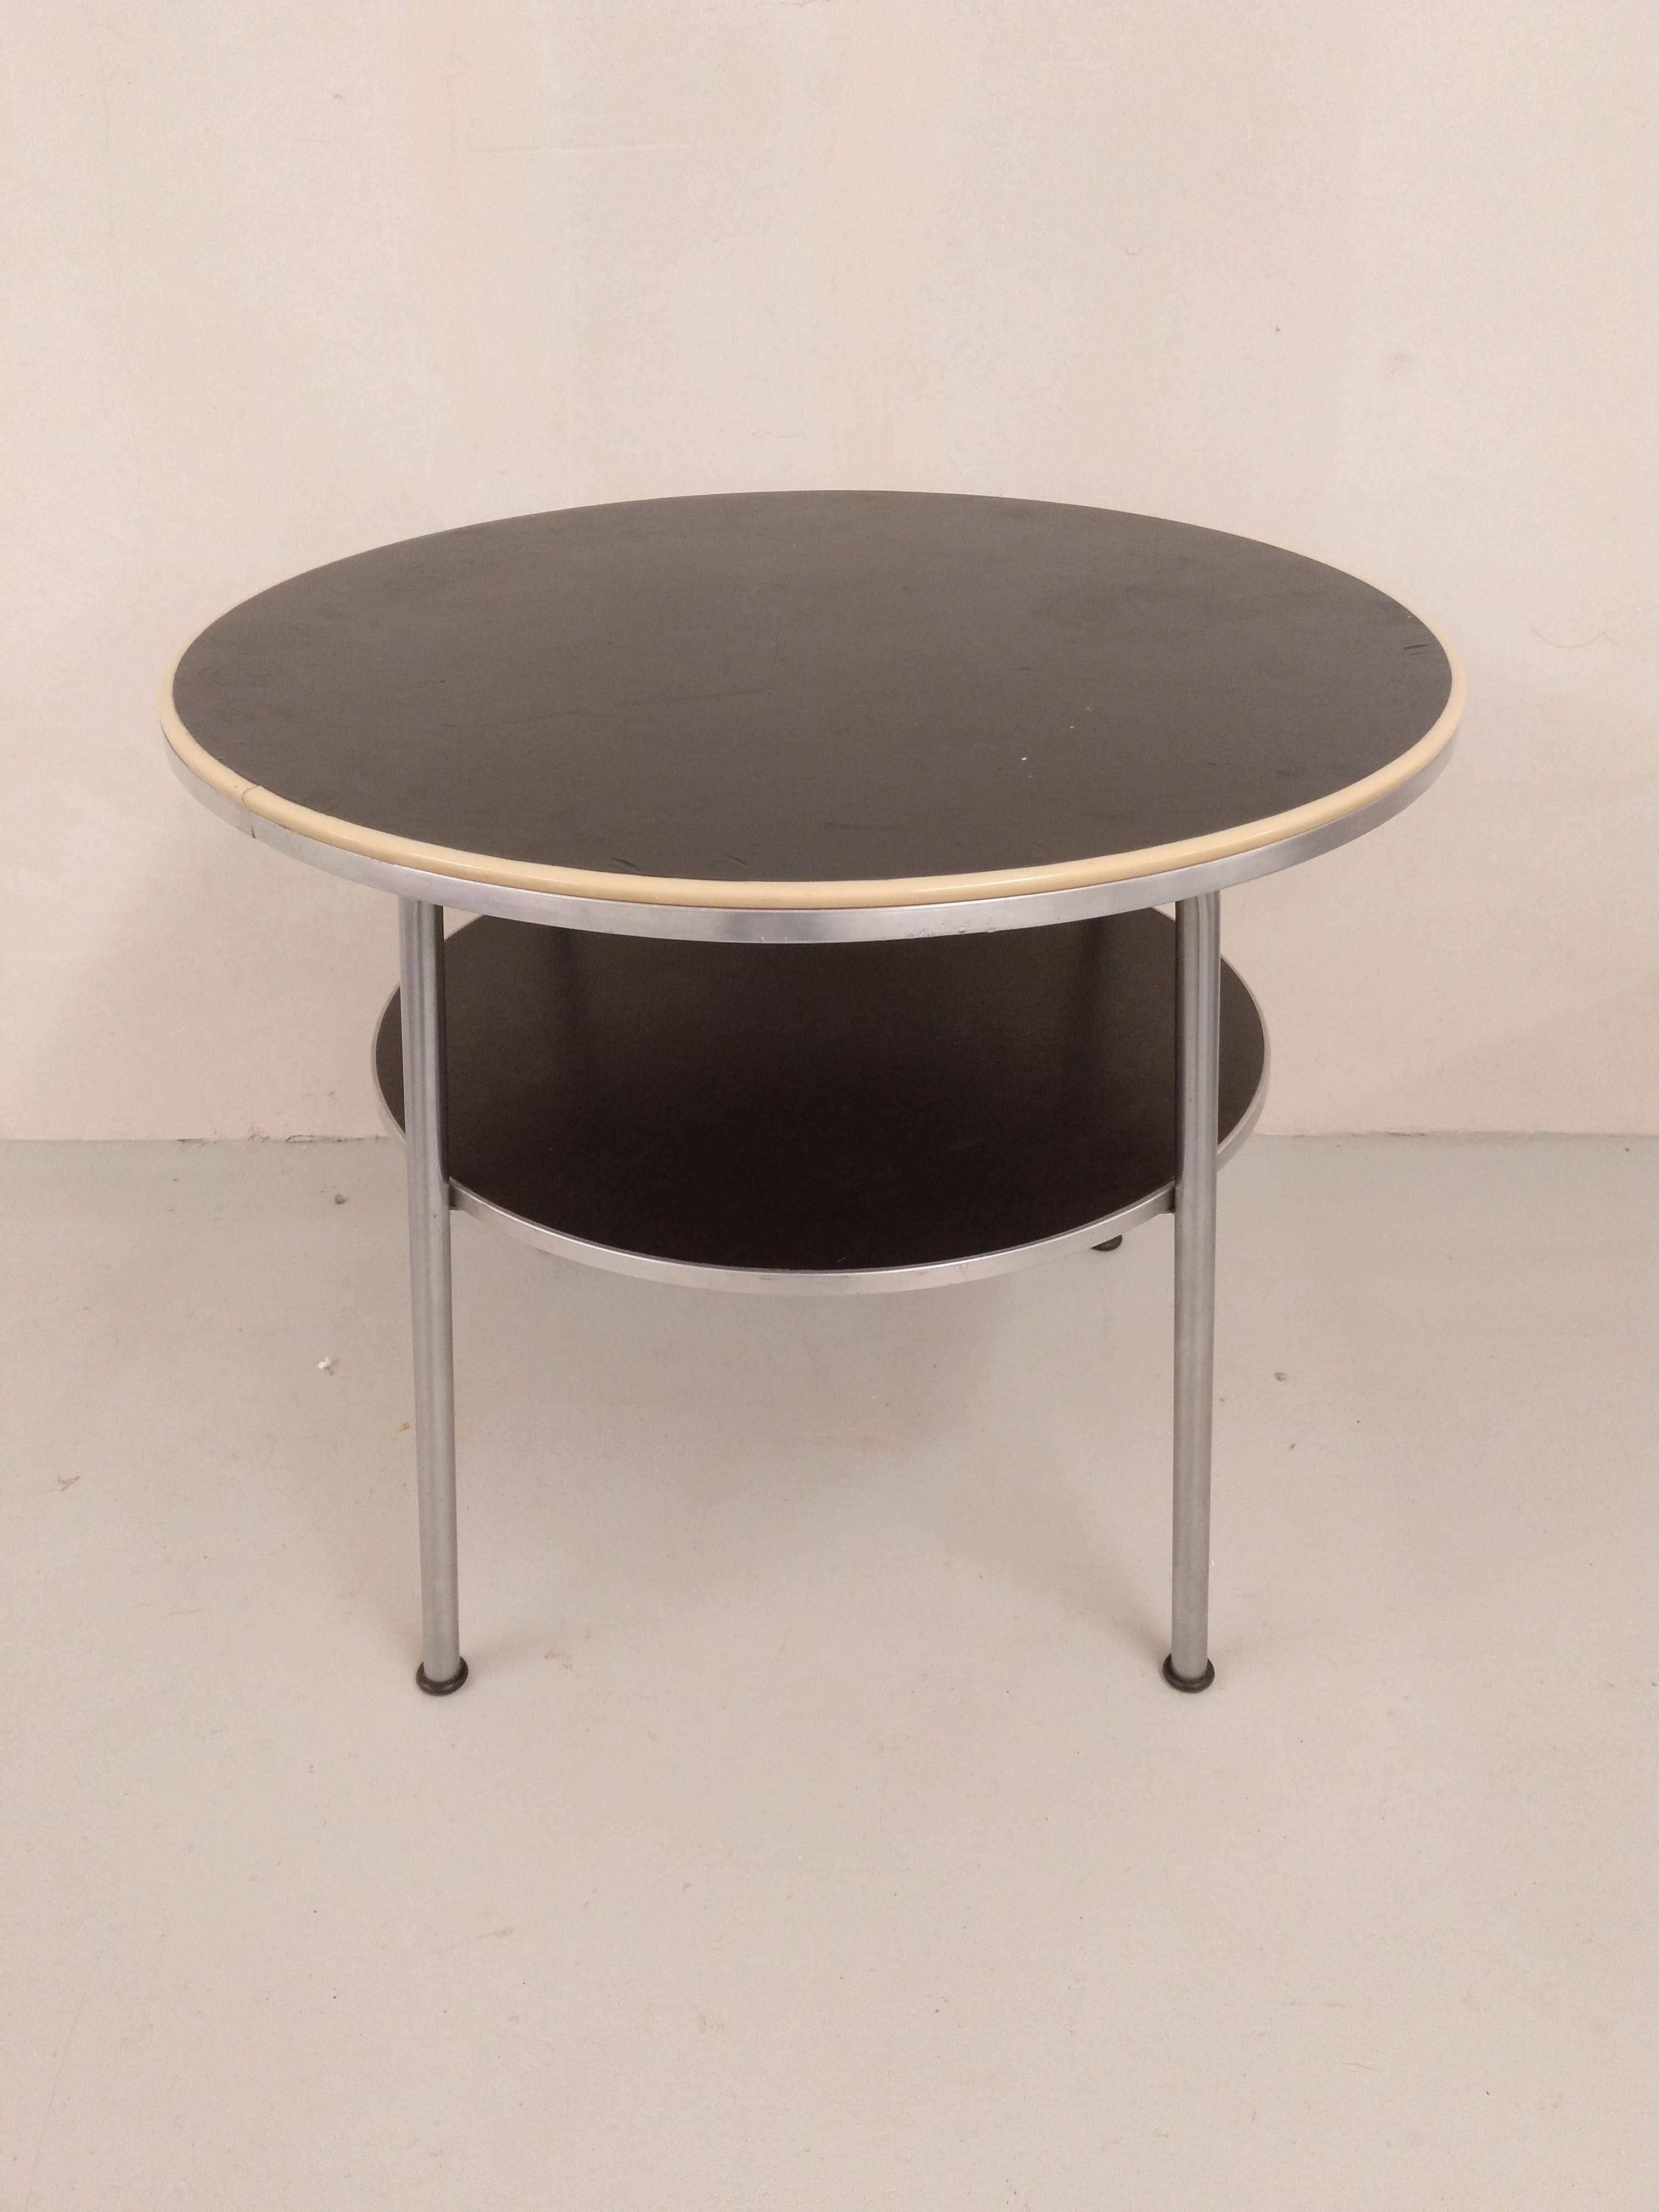 Migratie Vooruitgang Baan El Vinta: Side table Gispen (Furniture, Design)